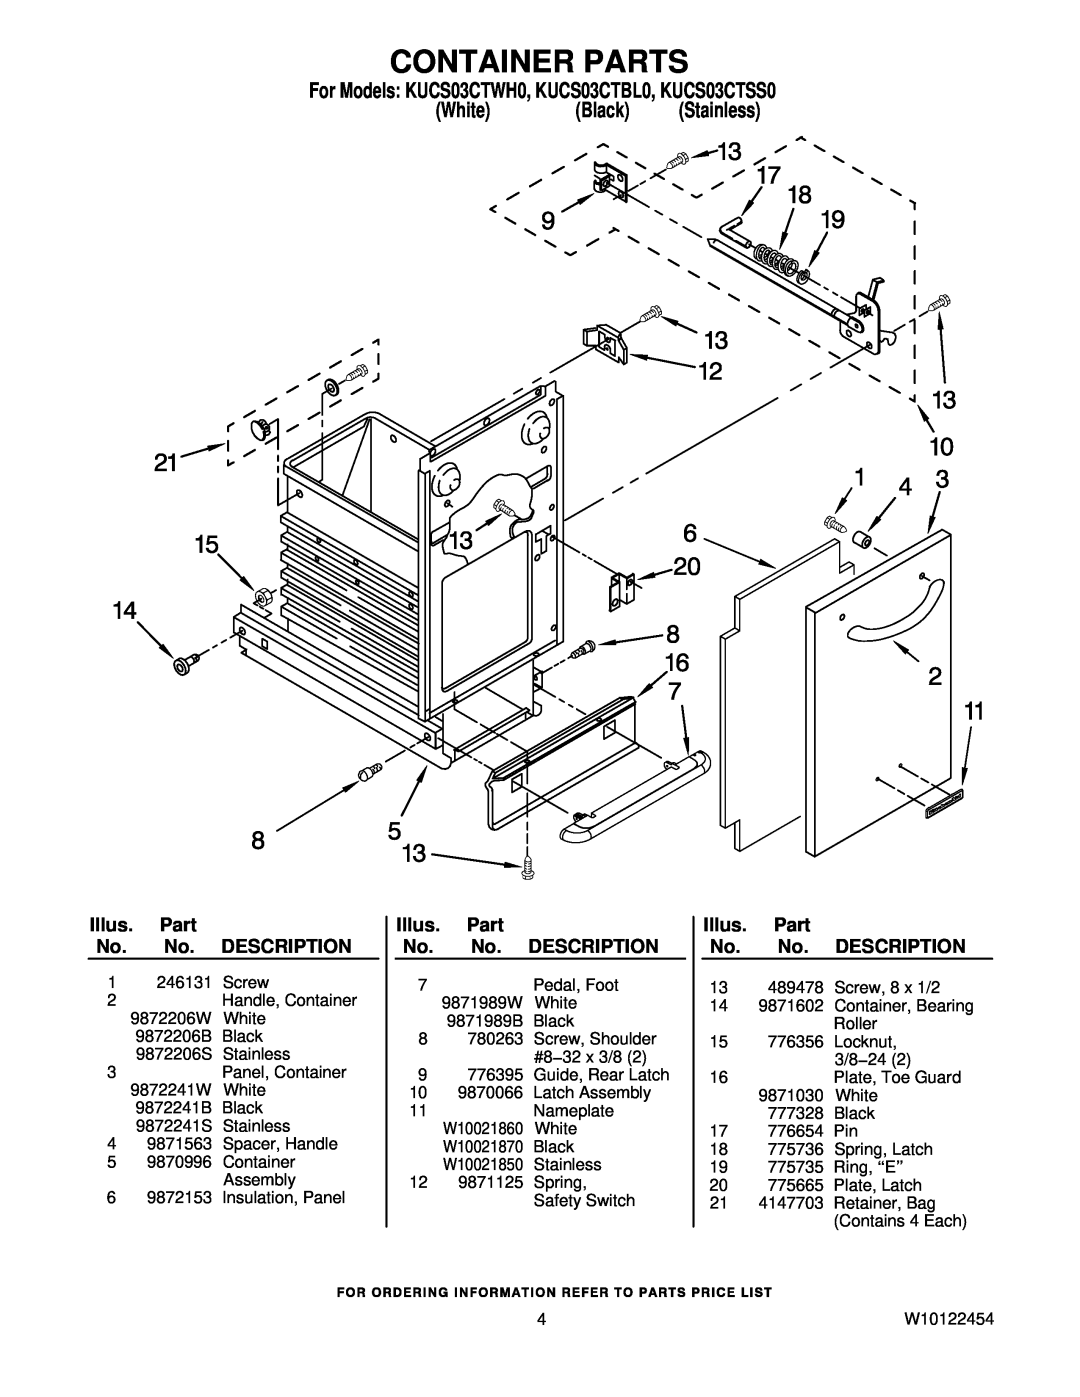 KitchenAid manual Container Parts, For Models KUCS03CTWH0, KUCS03CTBL0, KUCS03CTSS0, White, Black 